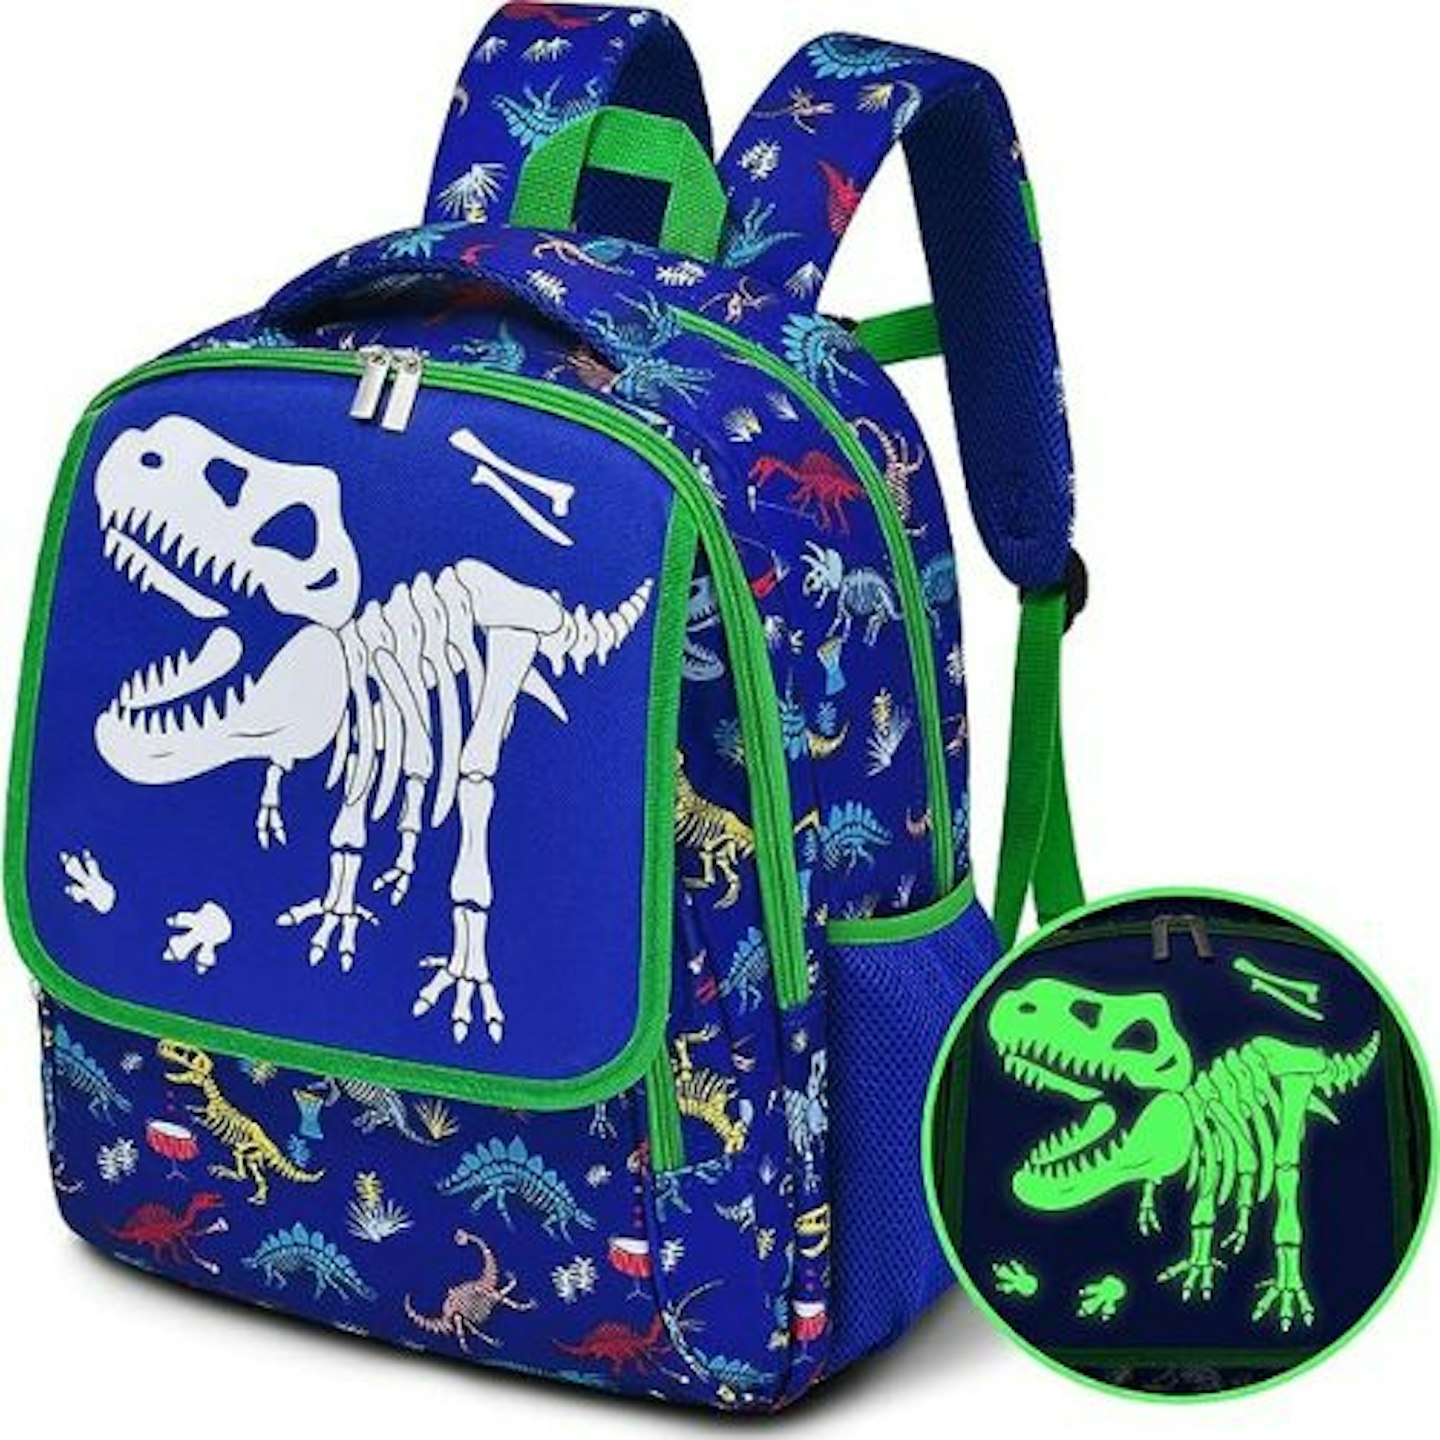 Best back to school backpacks WERNNSAI Backpack